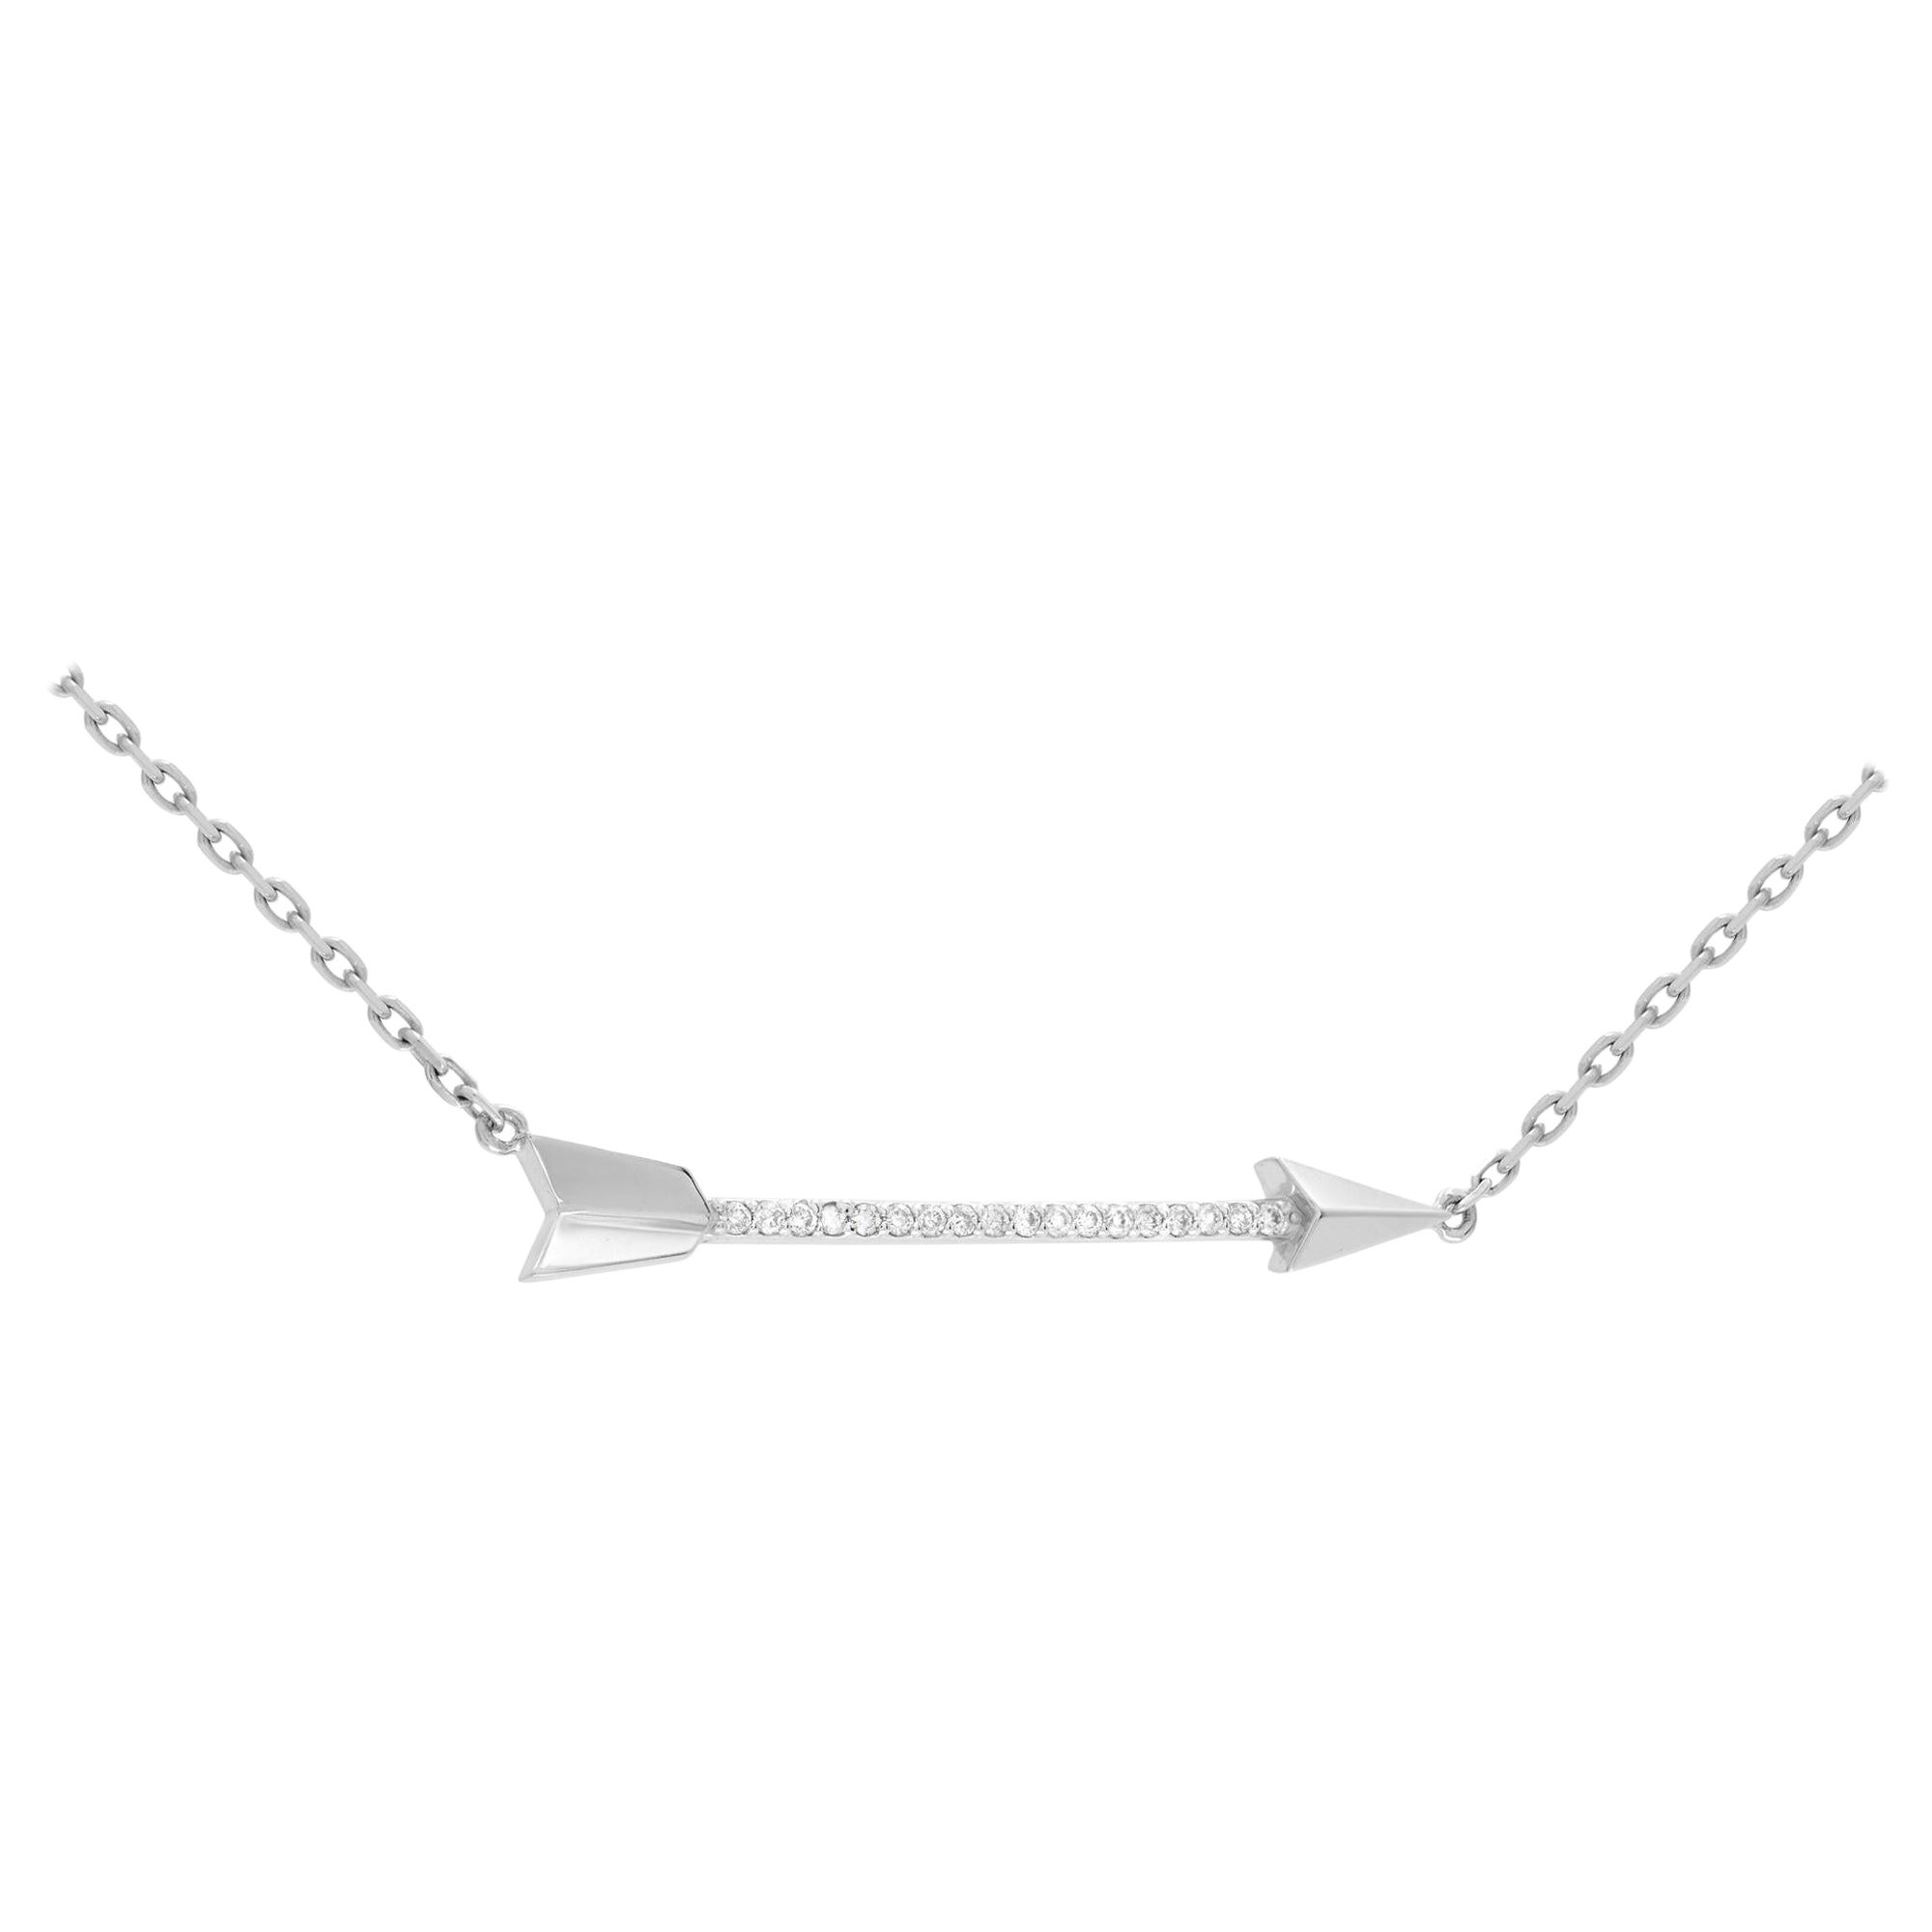 Rachel Koen 14k White Gold Diamond Arrow Necklace 0.10cttw For Sale